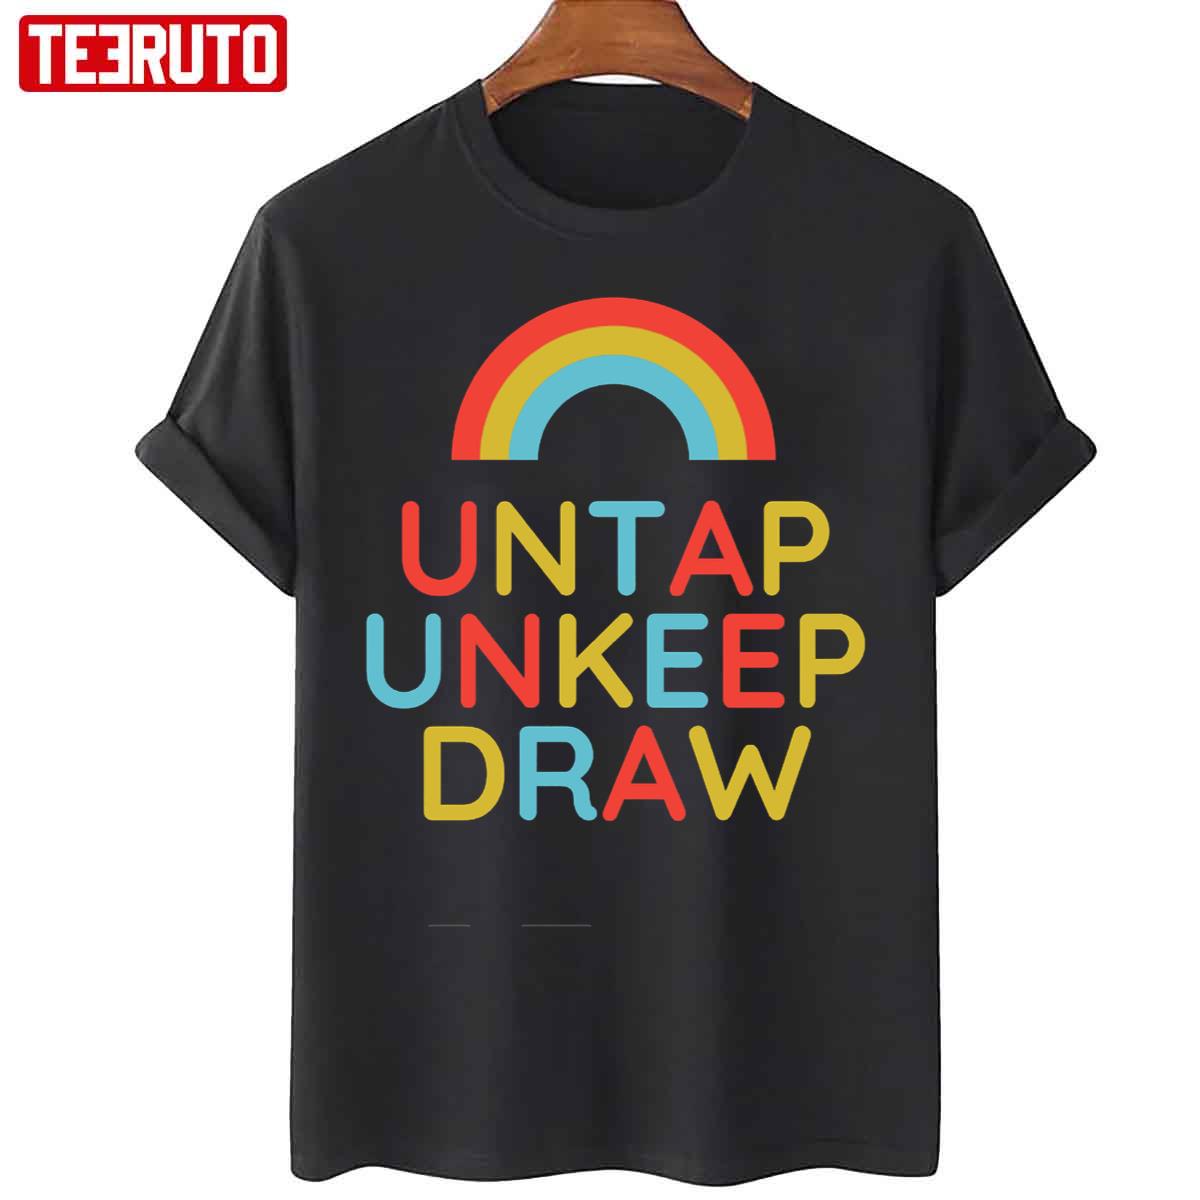 Untap Unkeep Draw Rainbow Unisex T-Shirt